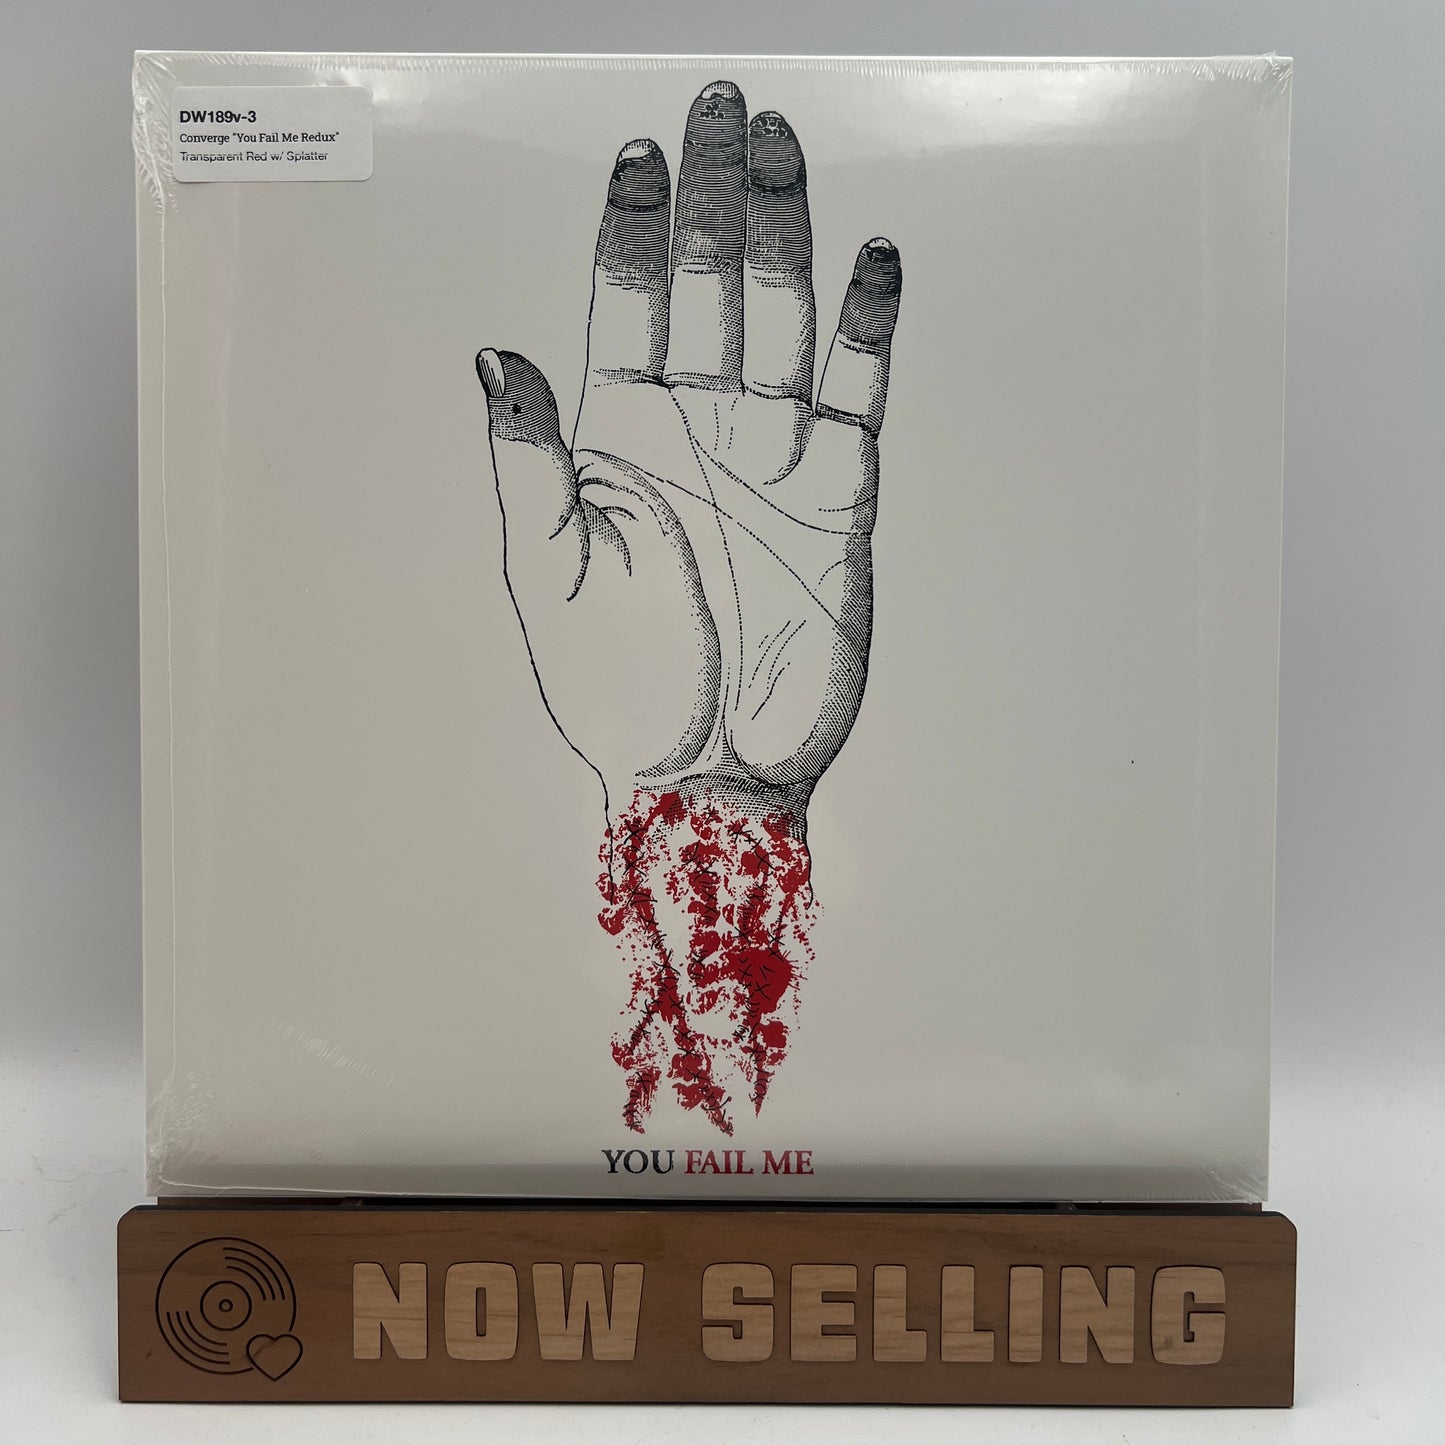 Converge - You Fail Me Redux Vinyl LP SEALED Red w/ White Splatter